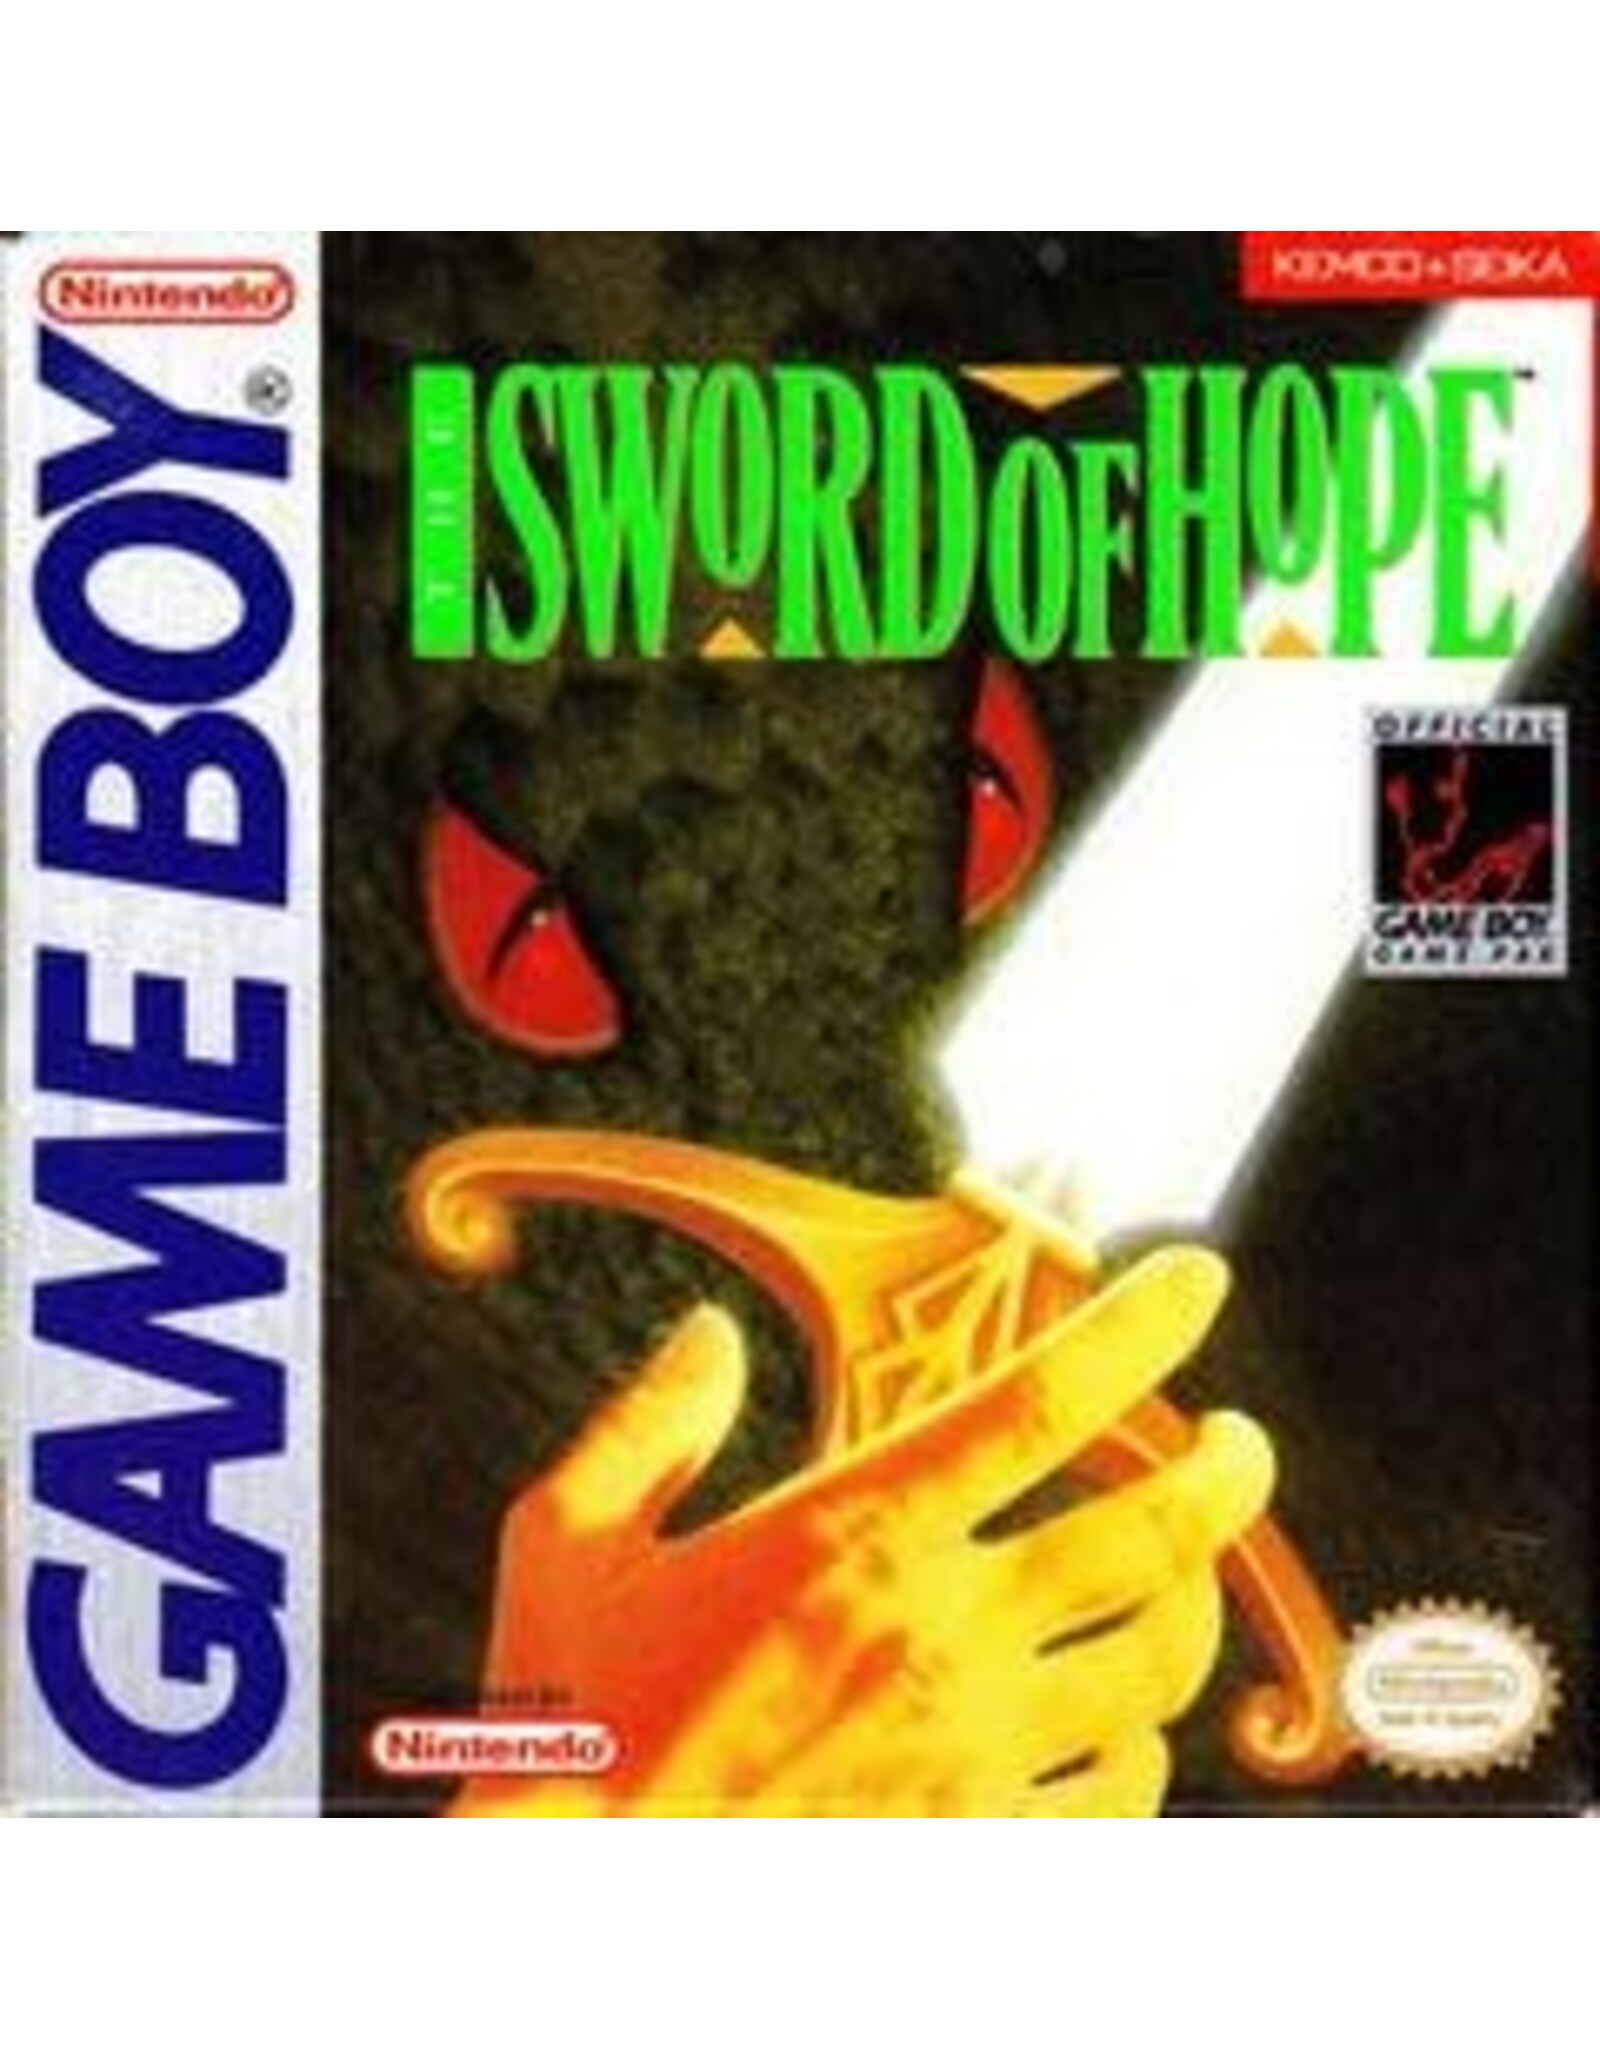 Game Boy Sword of Hope (CiB)